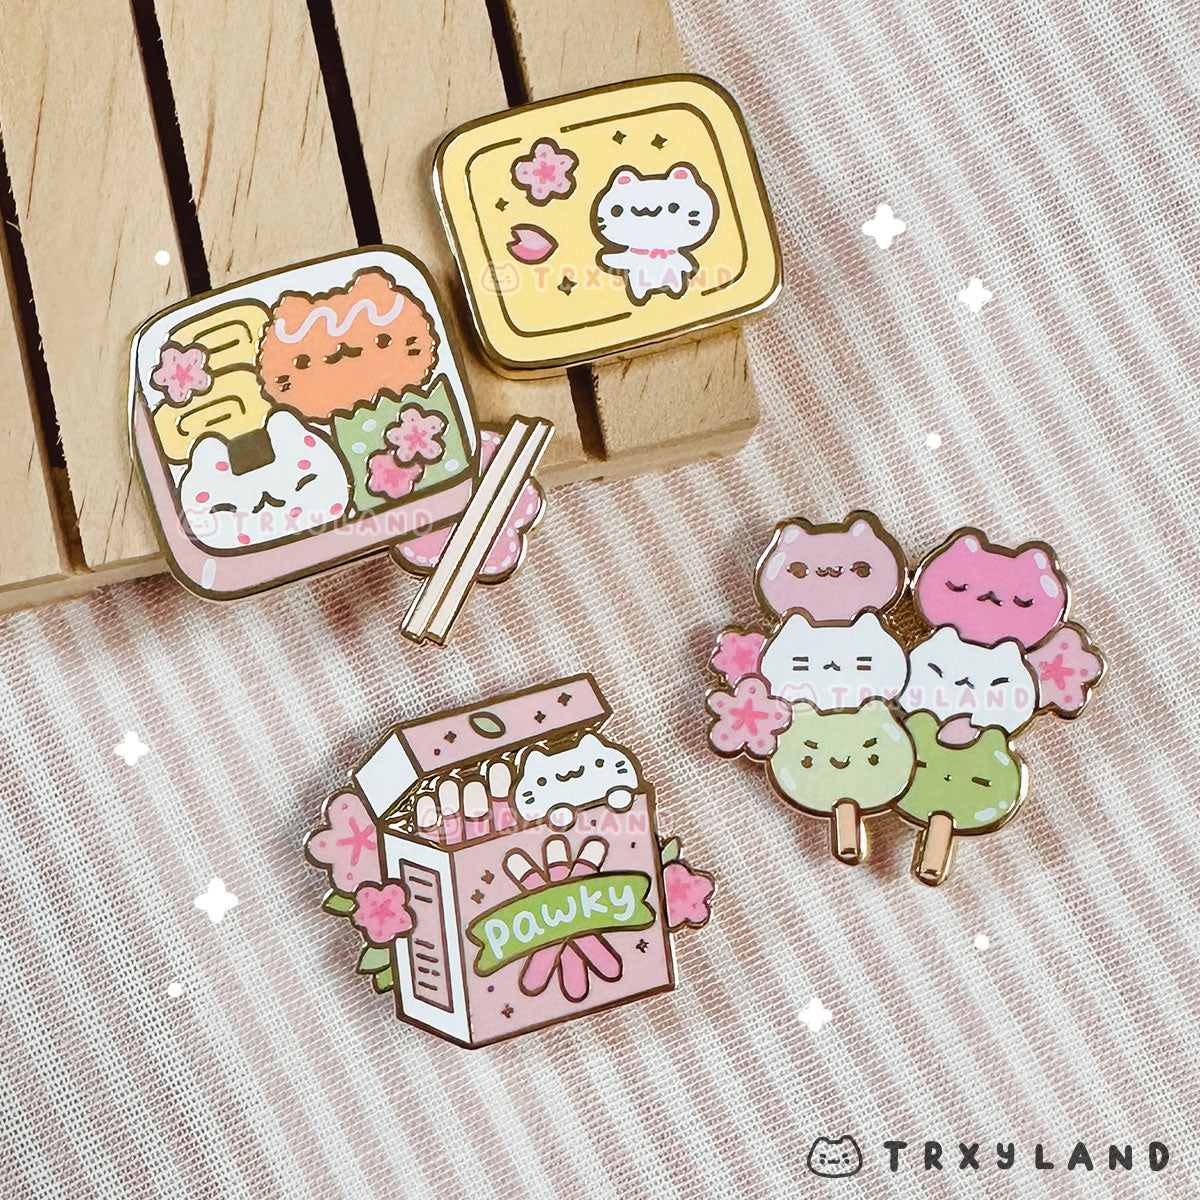 Bento Box Magnet | Vinyl Magnet | Cute Food Magnet | Japanese Food Magnet |  Kawaii Food Magnet | Anime Food | Japan Inspired | Cartoon Food